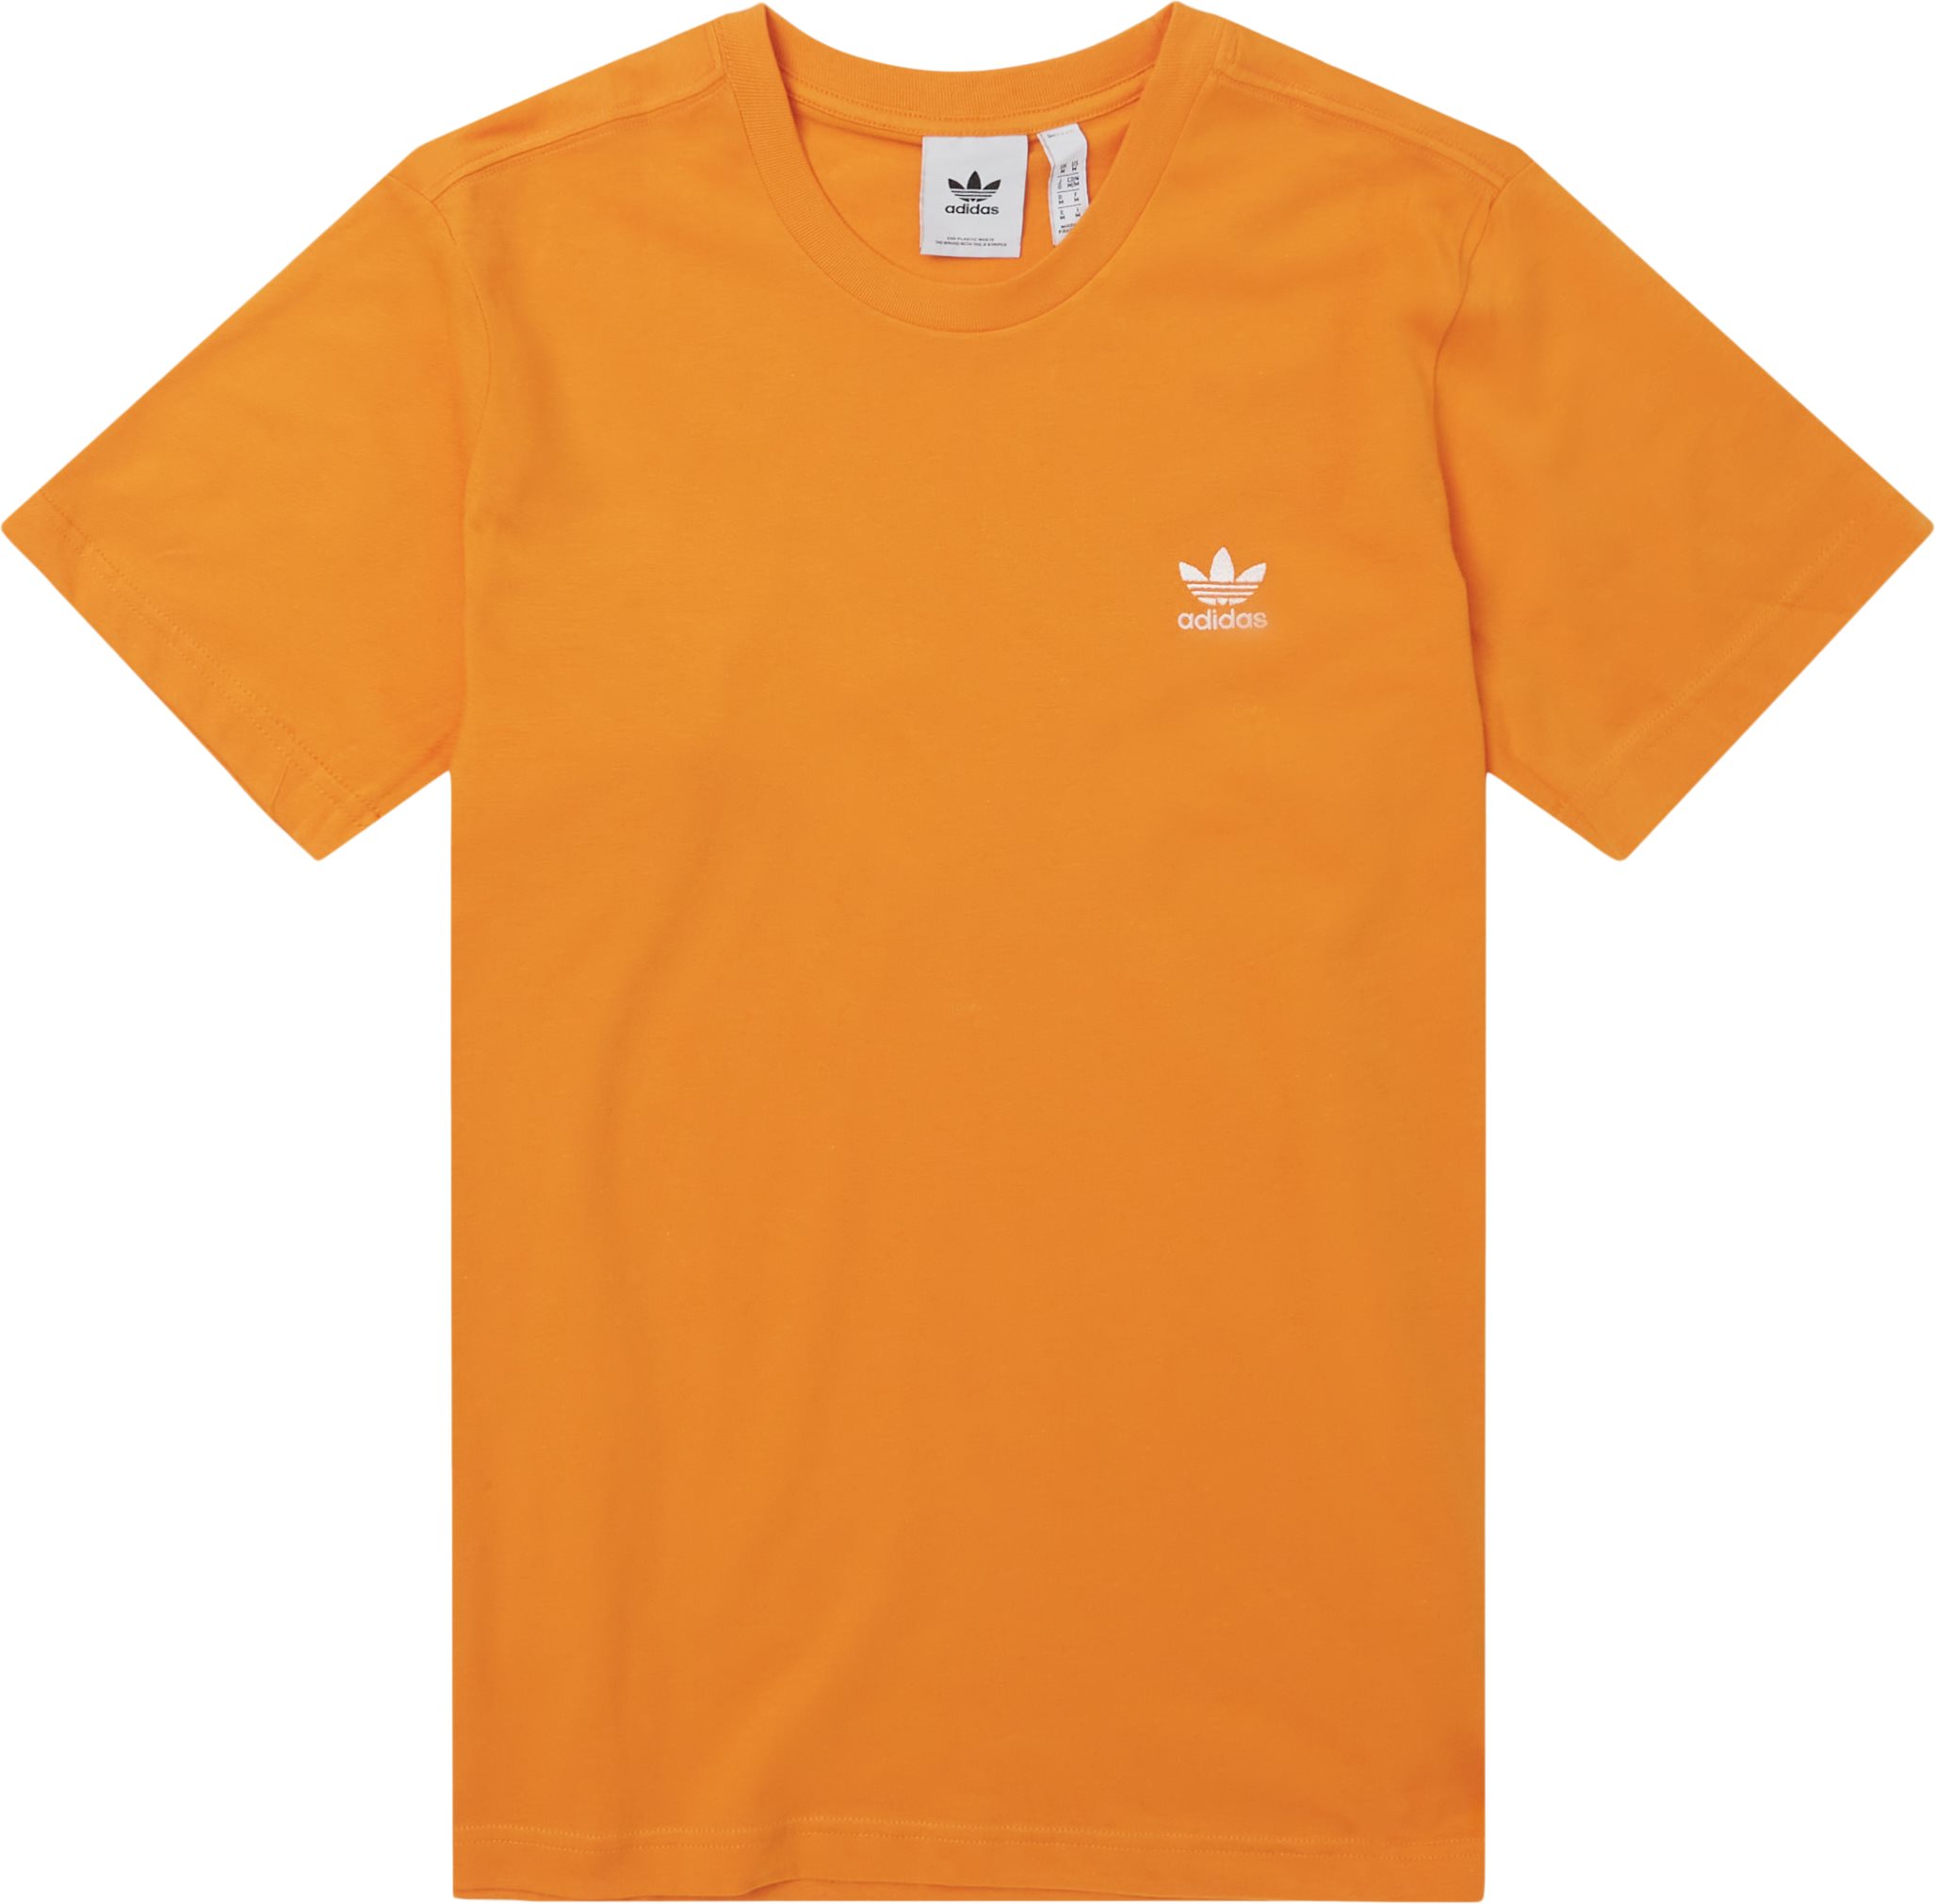 Essential Tee  - T-shirts - Regular fit - Orange